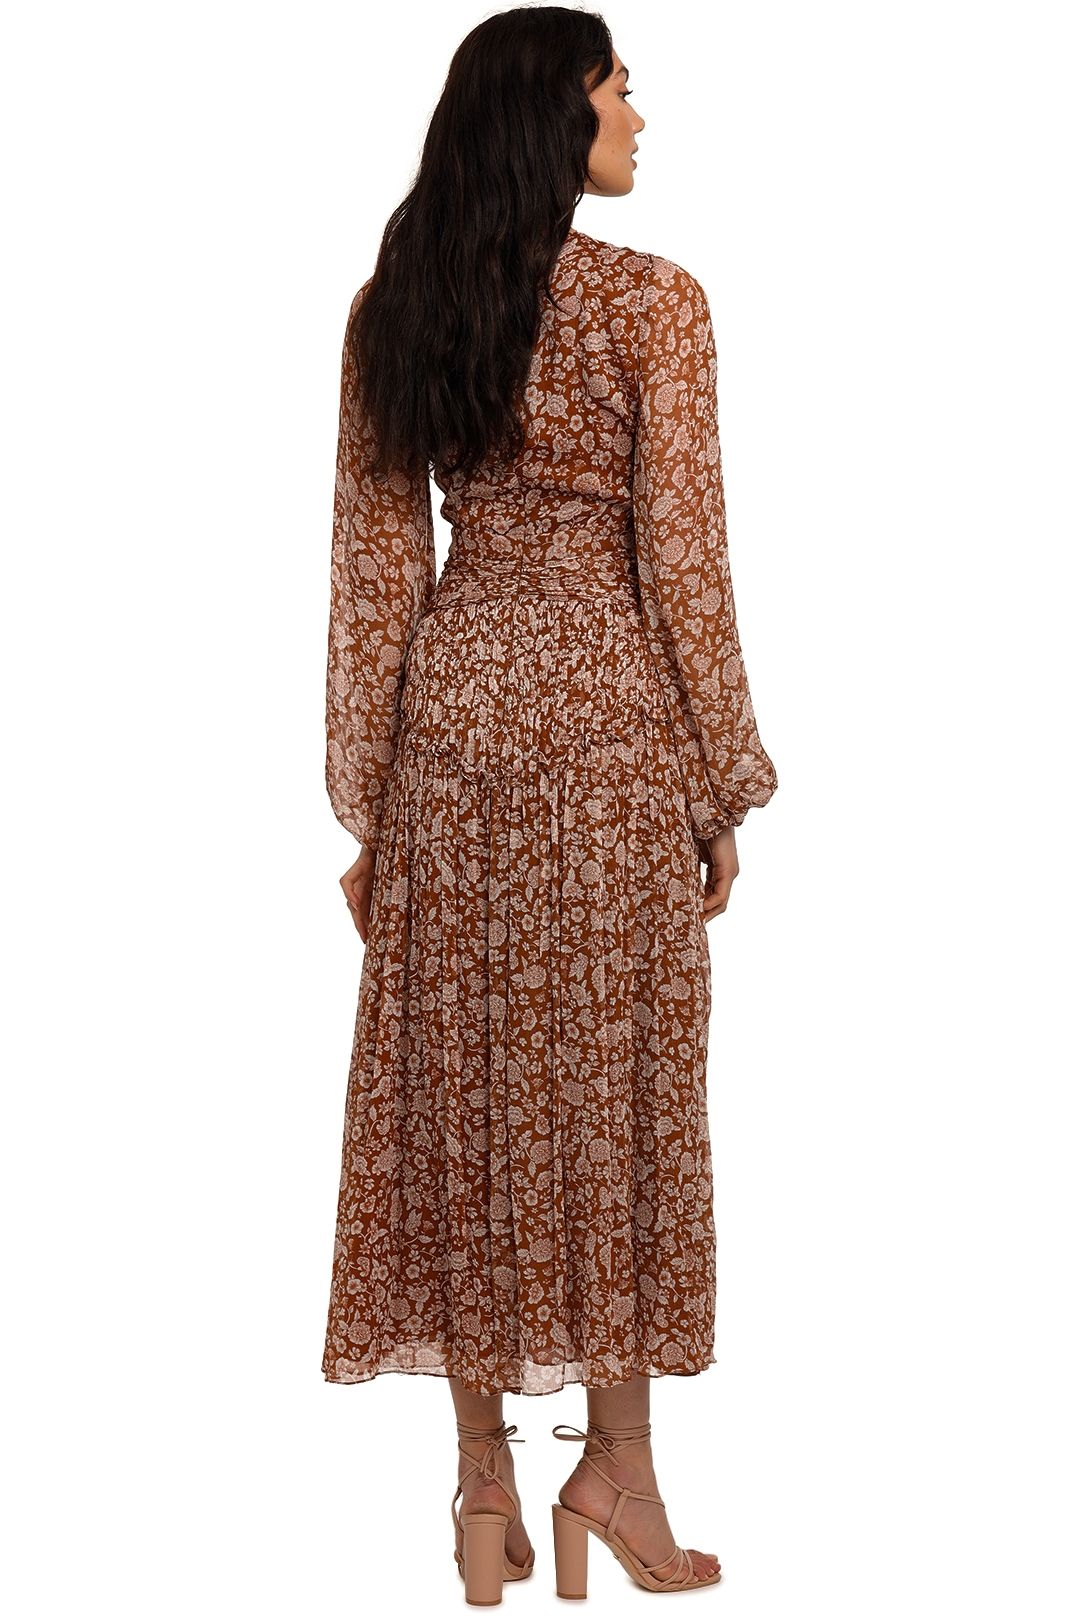 Shona Joy Odette Long Sleeve Midi Dress Brown